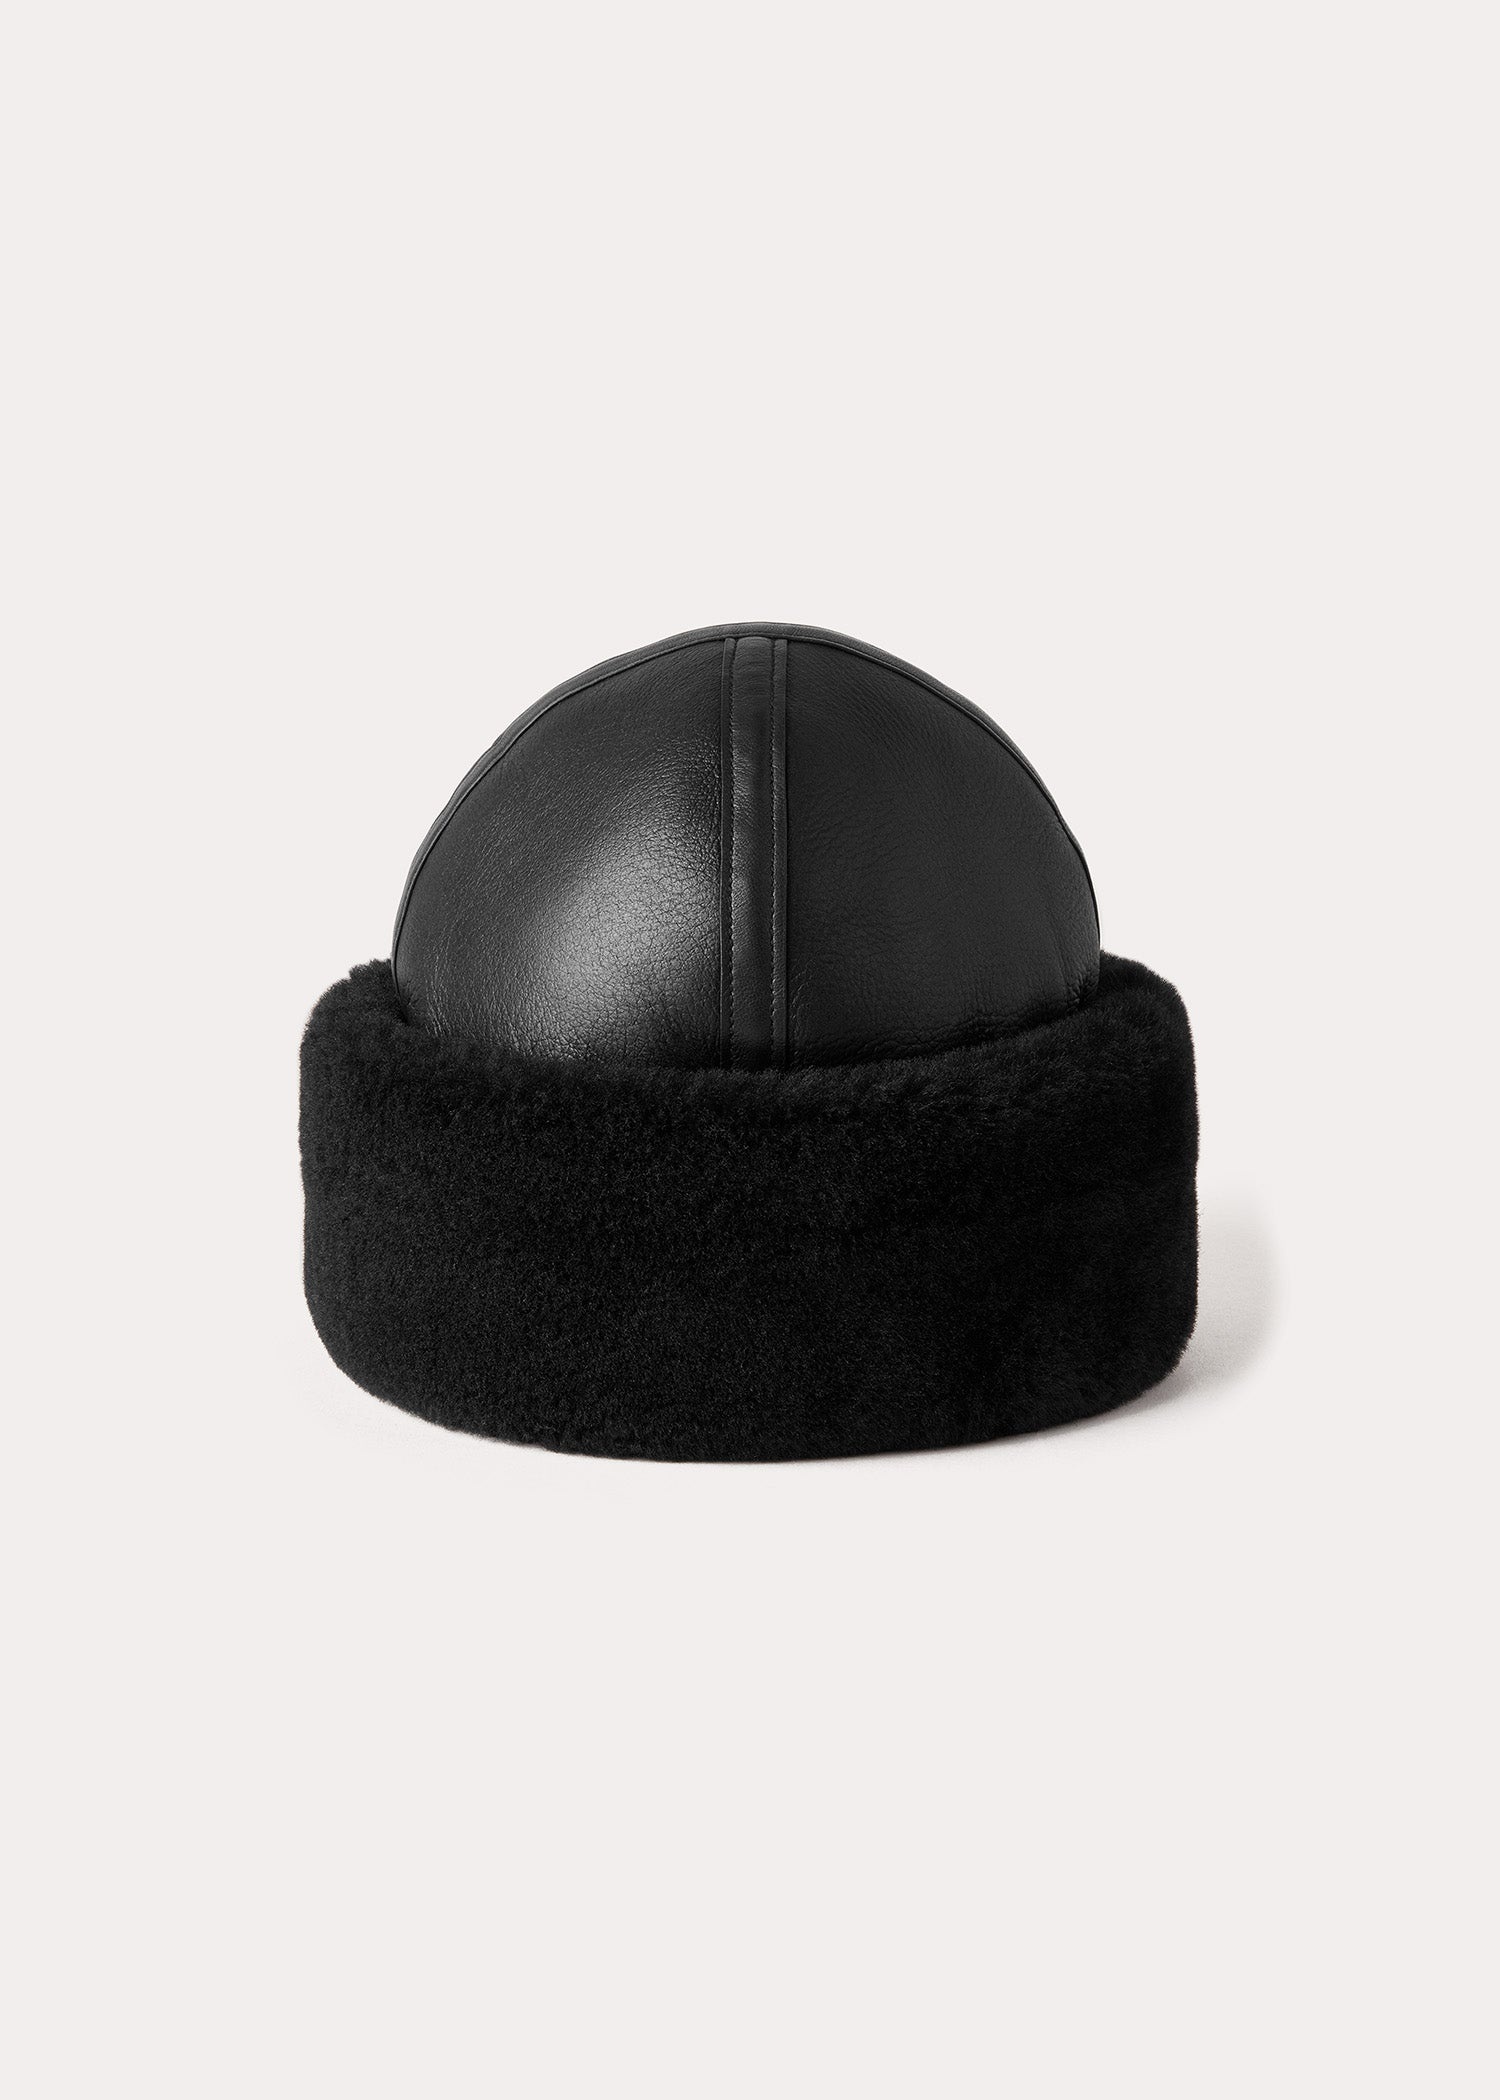 Shearling winter hat black - 4